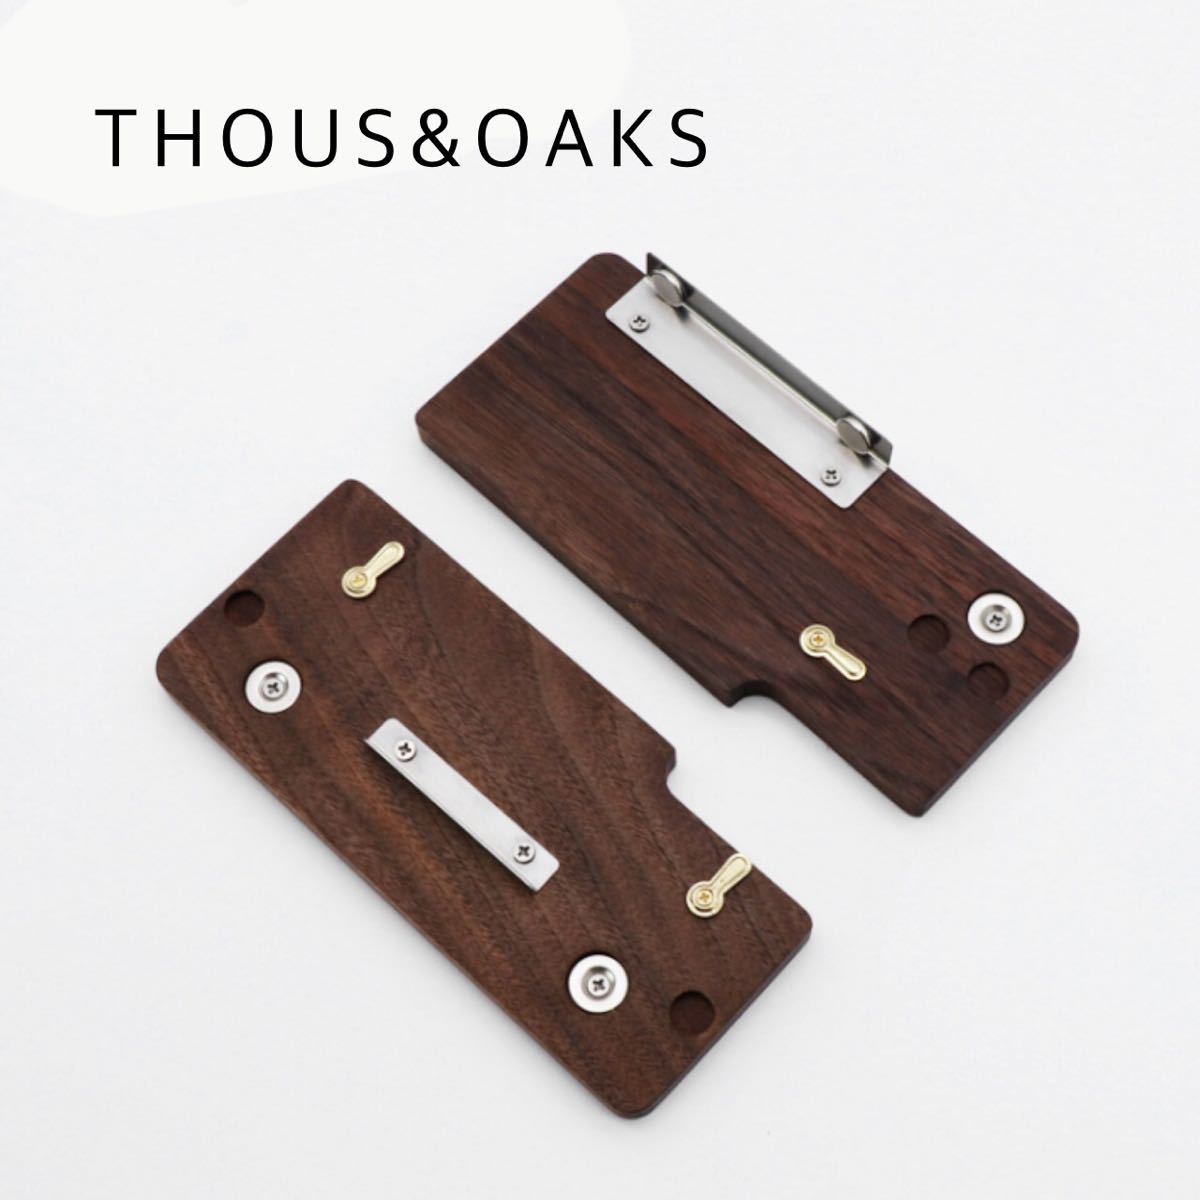 THOUS&OAKS KOVEA CUBE コベアキューブ専用 木製側板 木製パーツ3点セット カスタムパーツ 